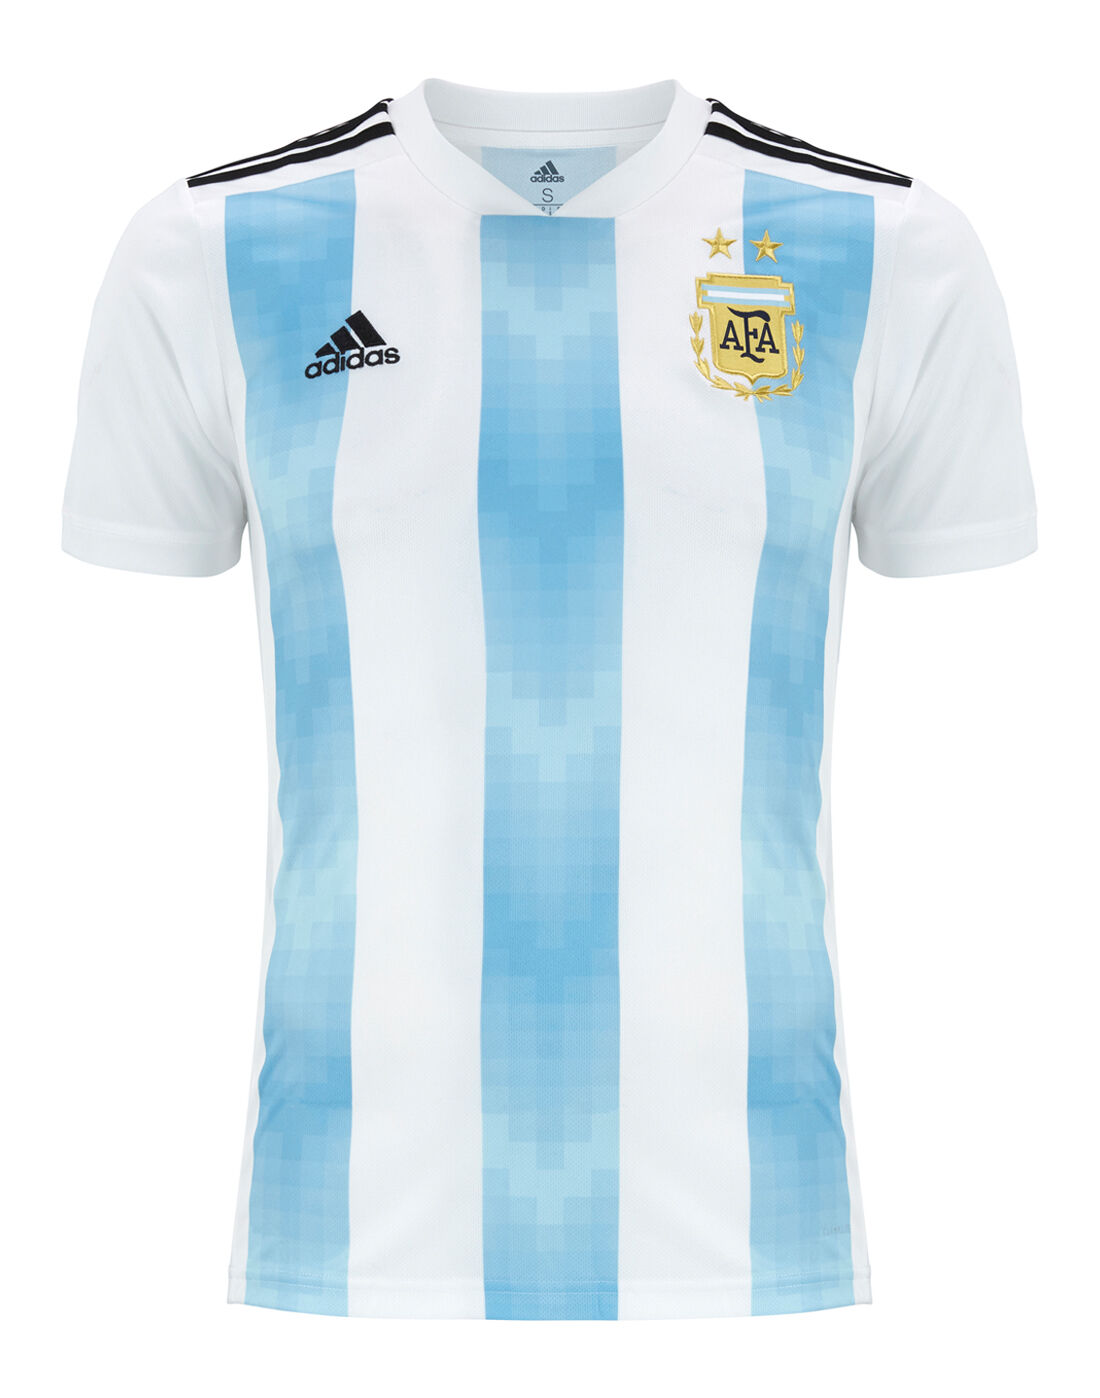 argentina football uniform